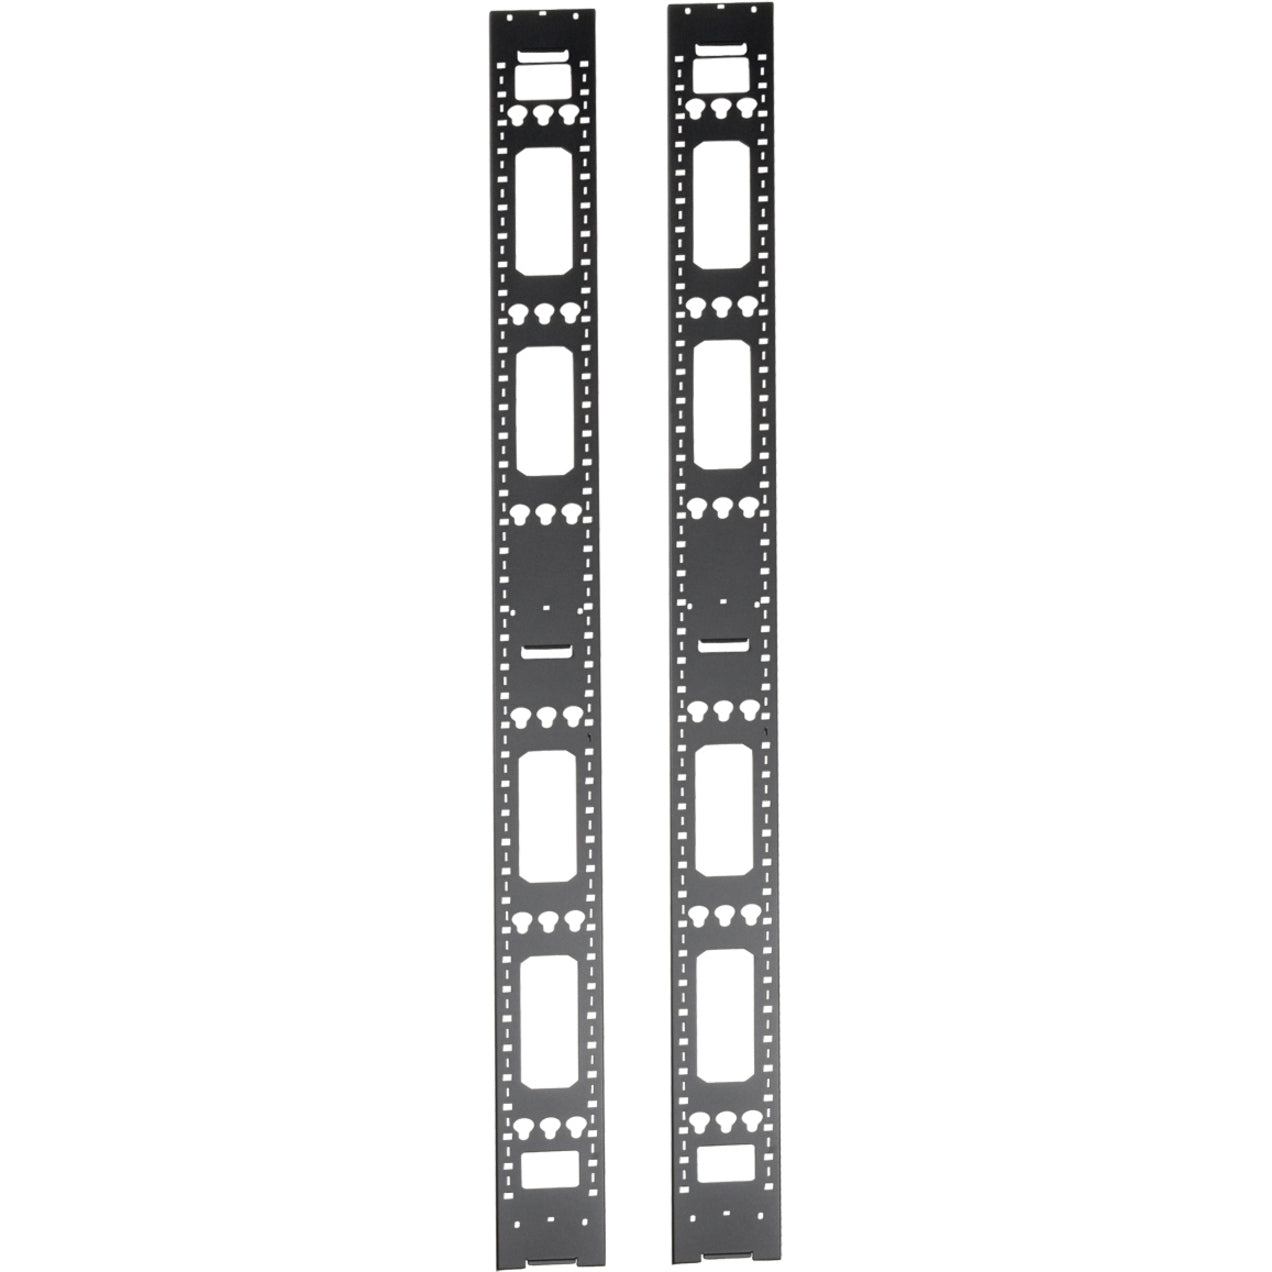 Tripp Lite SRVRTBAR Vertical Cable Management Bars, 42U Rack Height